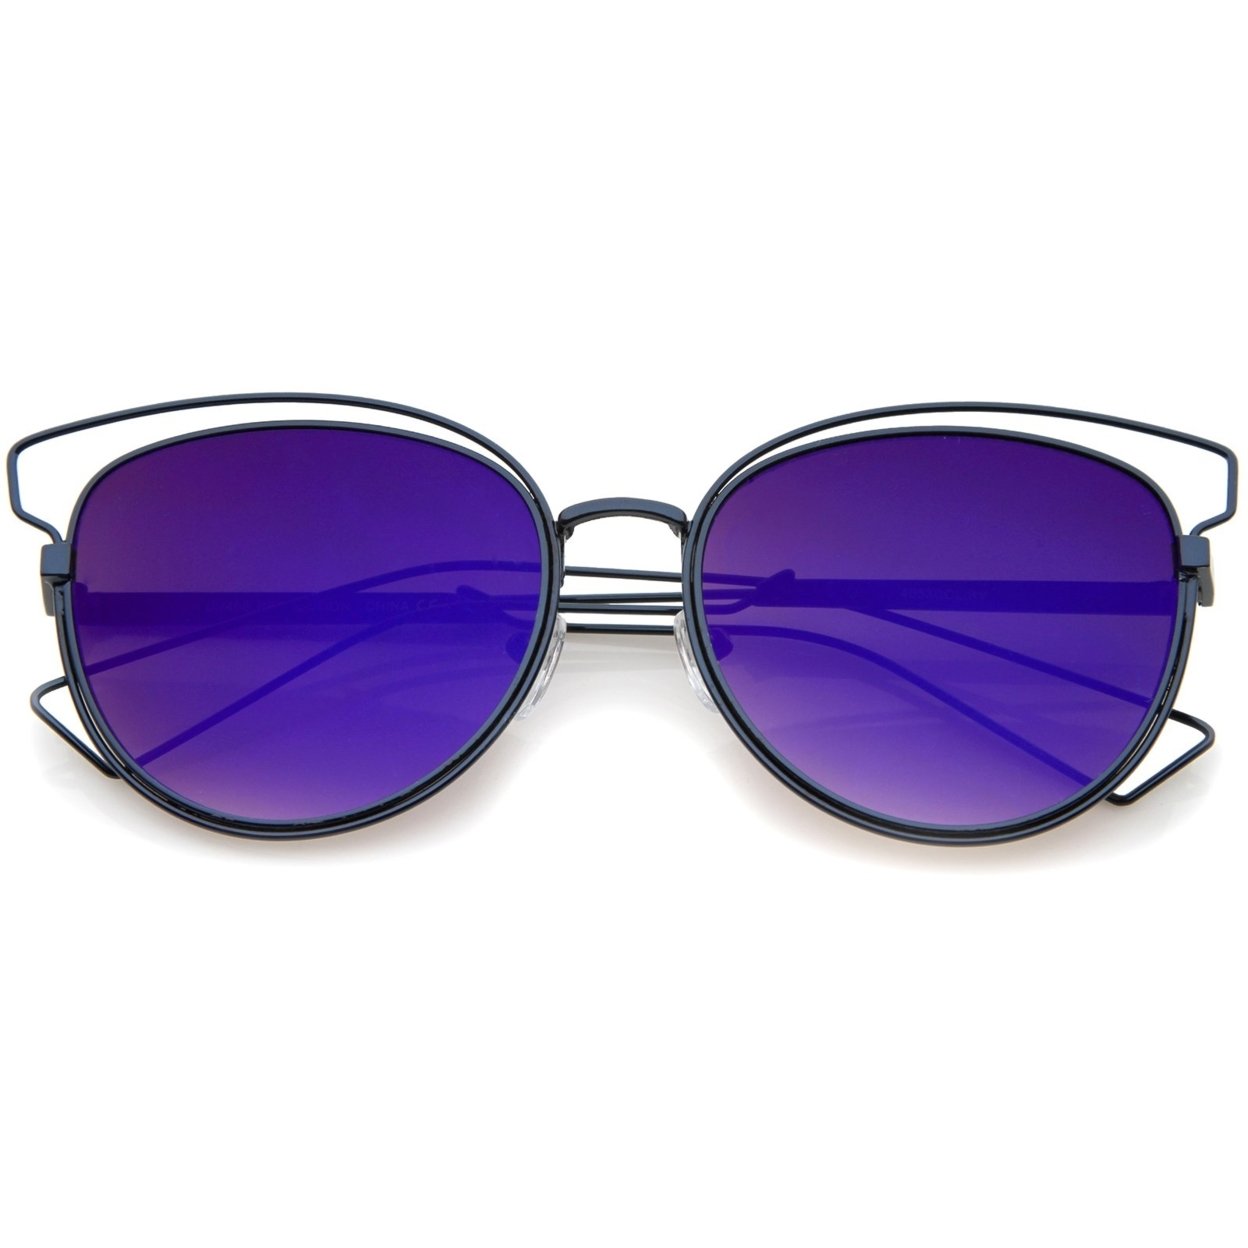 Womens Fashion Open Metal Frame Iridescent Lens Cat Eye Sunglasses 55mm - Gold / Gold Mirror